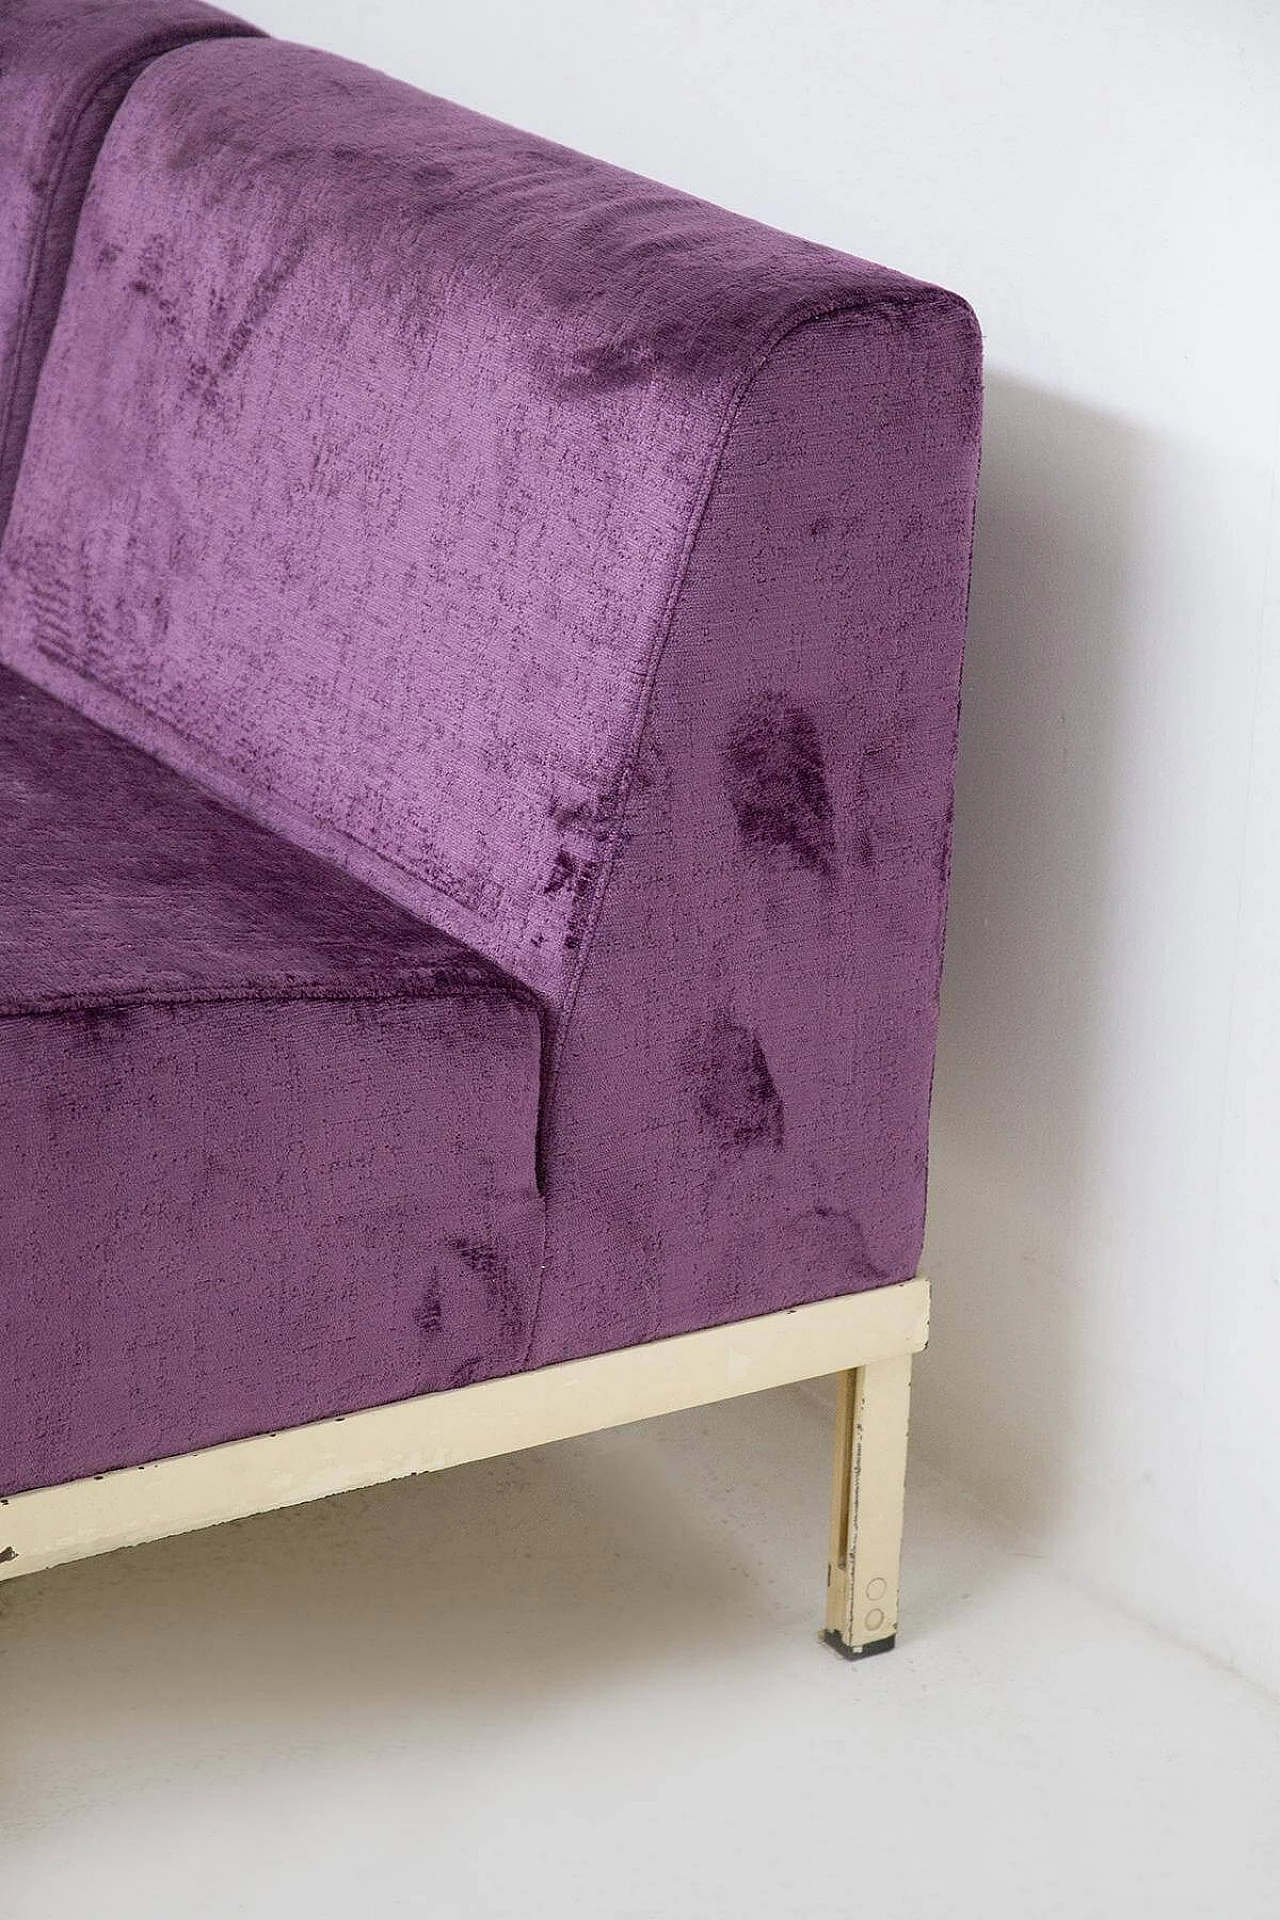 Pair of Gianfranco Frattini sofas in purple velvet, 1950s 1466282